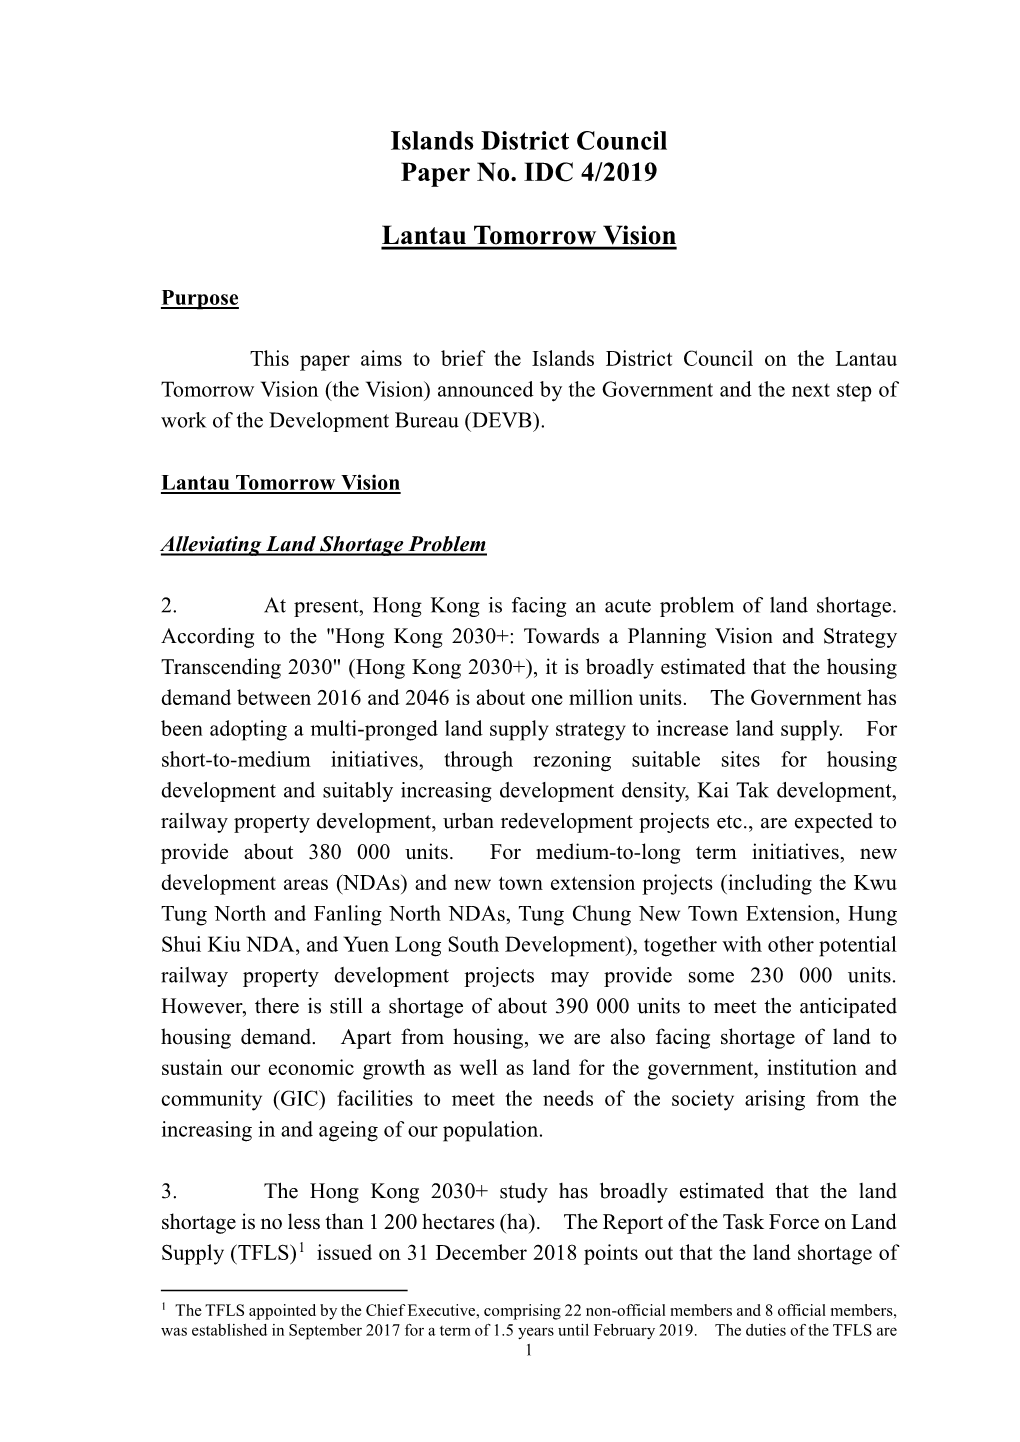 Islands District Council Paper No. IDC 4/2019 Lantau Tomorrow Vision